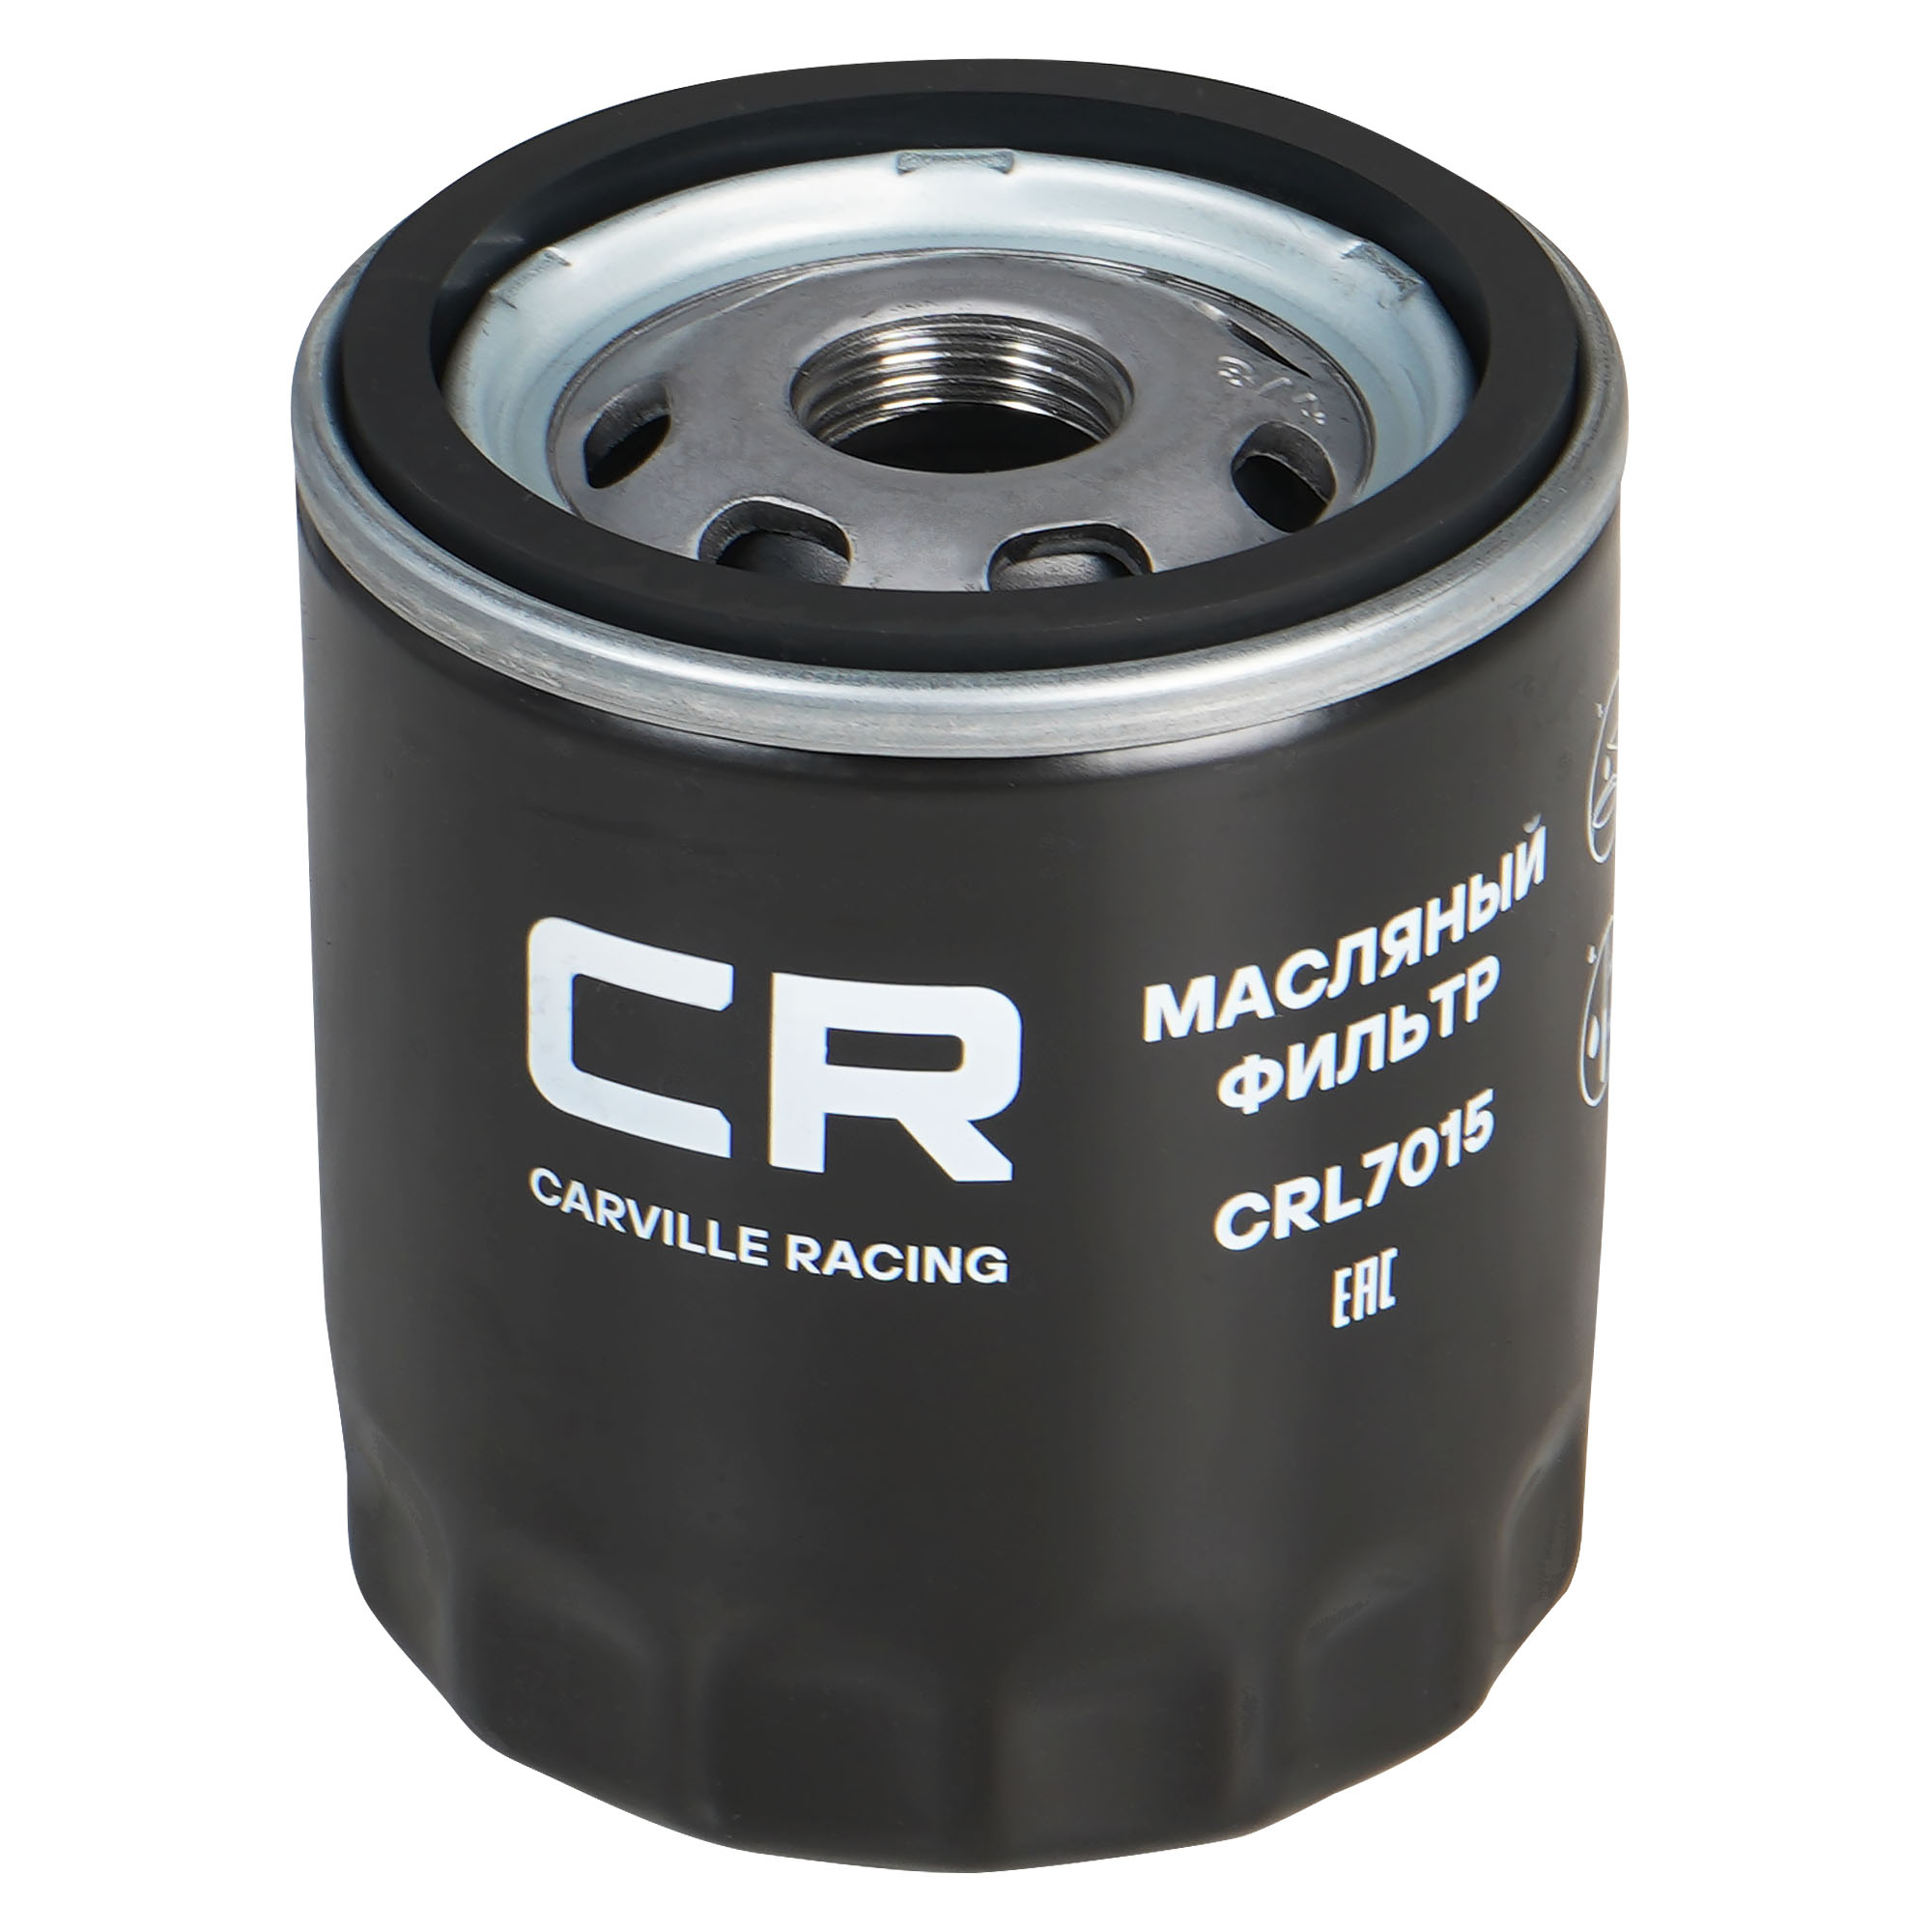 CARVILLE RACING CRL7015 Фильтр для а/м ford focus ii (05 )/iii (11 )/mondeo iii (00 ) 1.6ti/1.8i/2.0i (масл.) (crl701